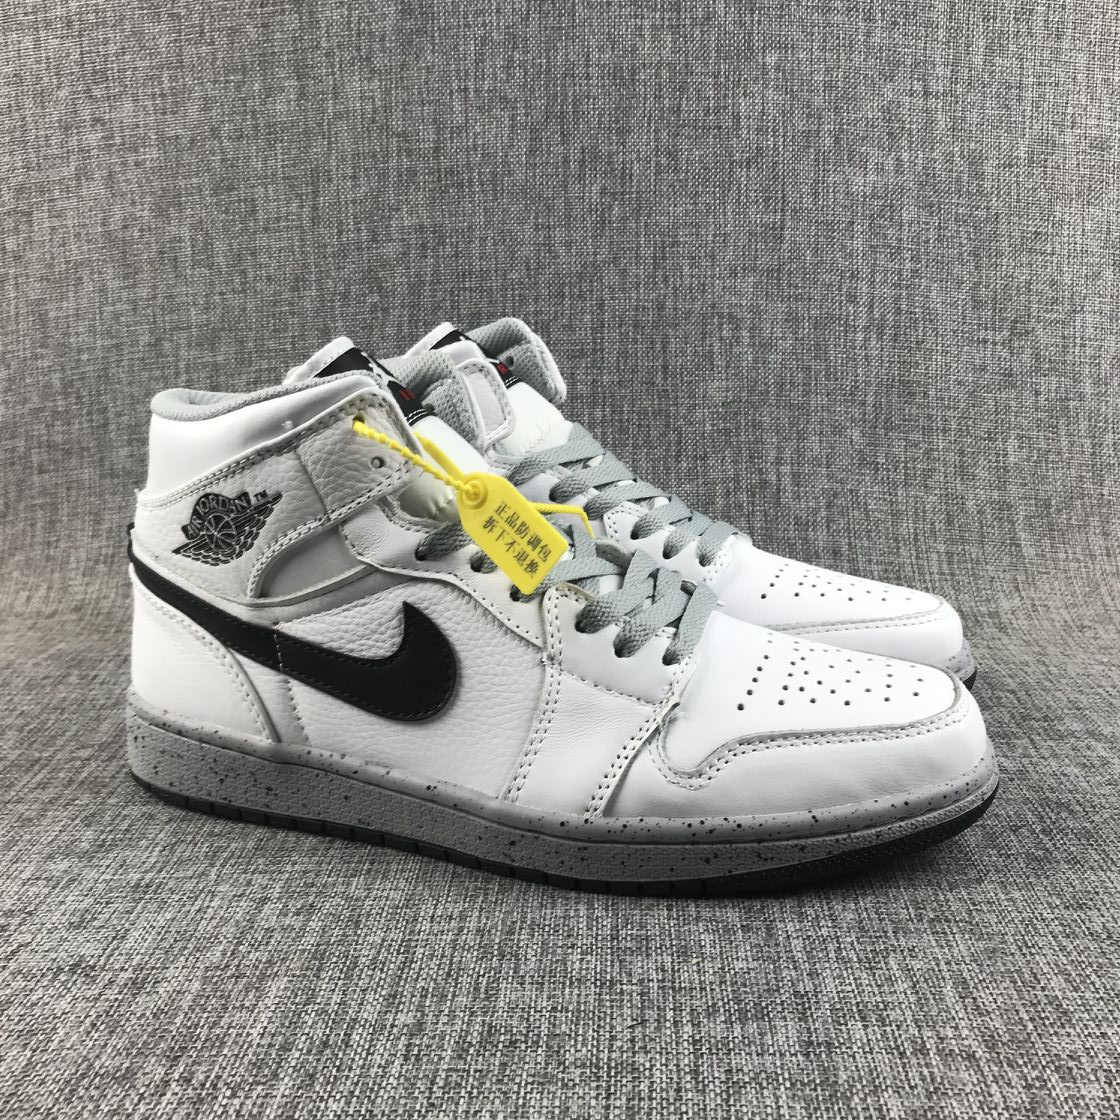 Air Jordan 1 White Cement Shoes - Click Image to Close